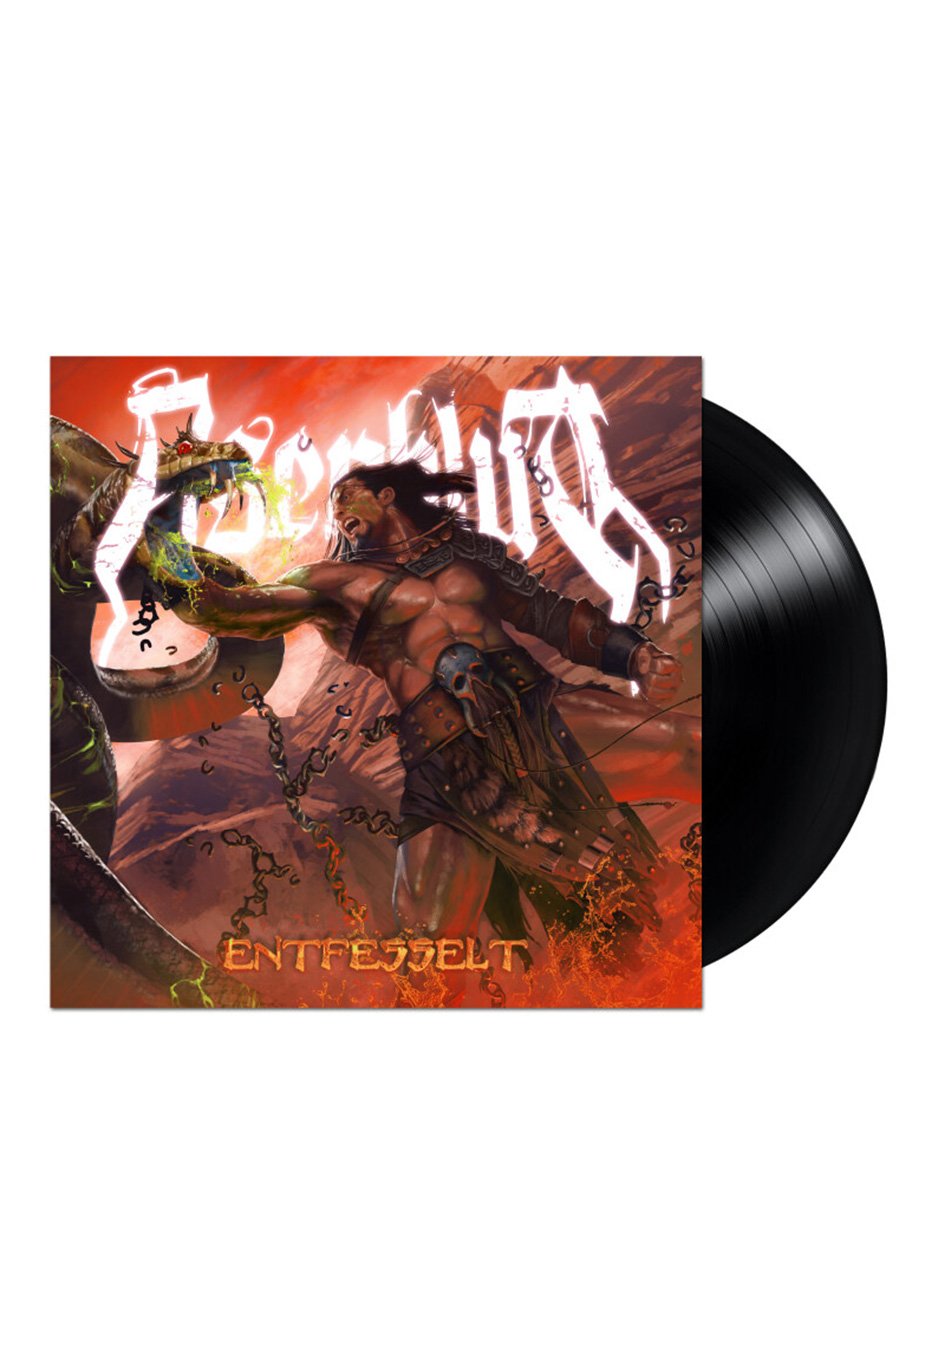 Asenblut - Entfesselt Ltd. - Vinyl